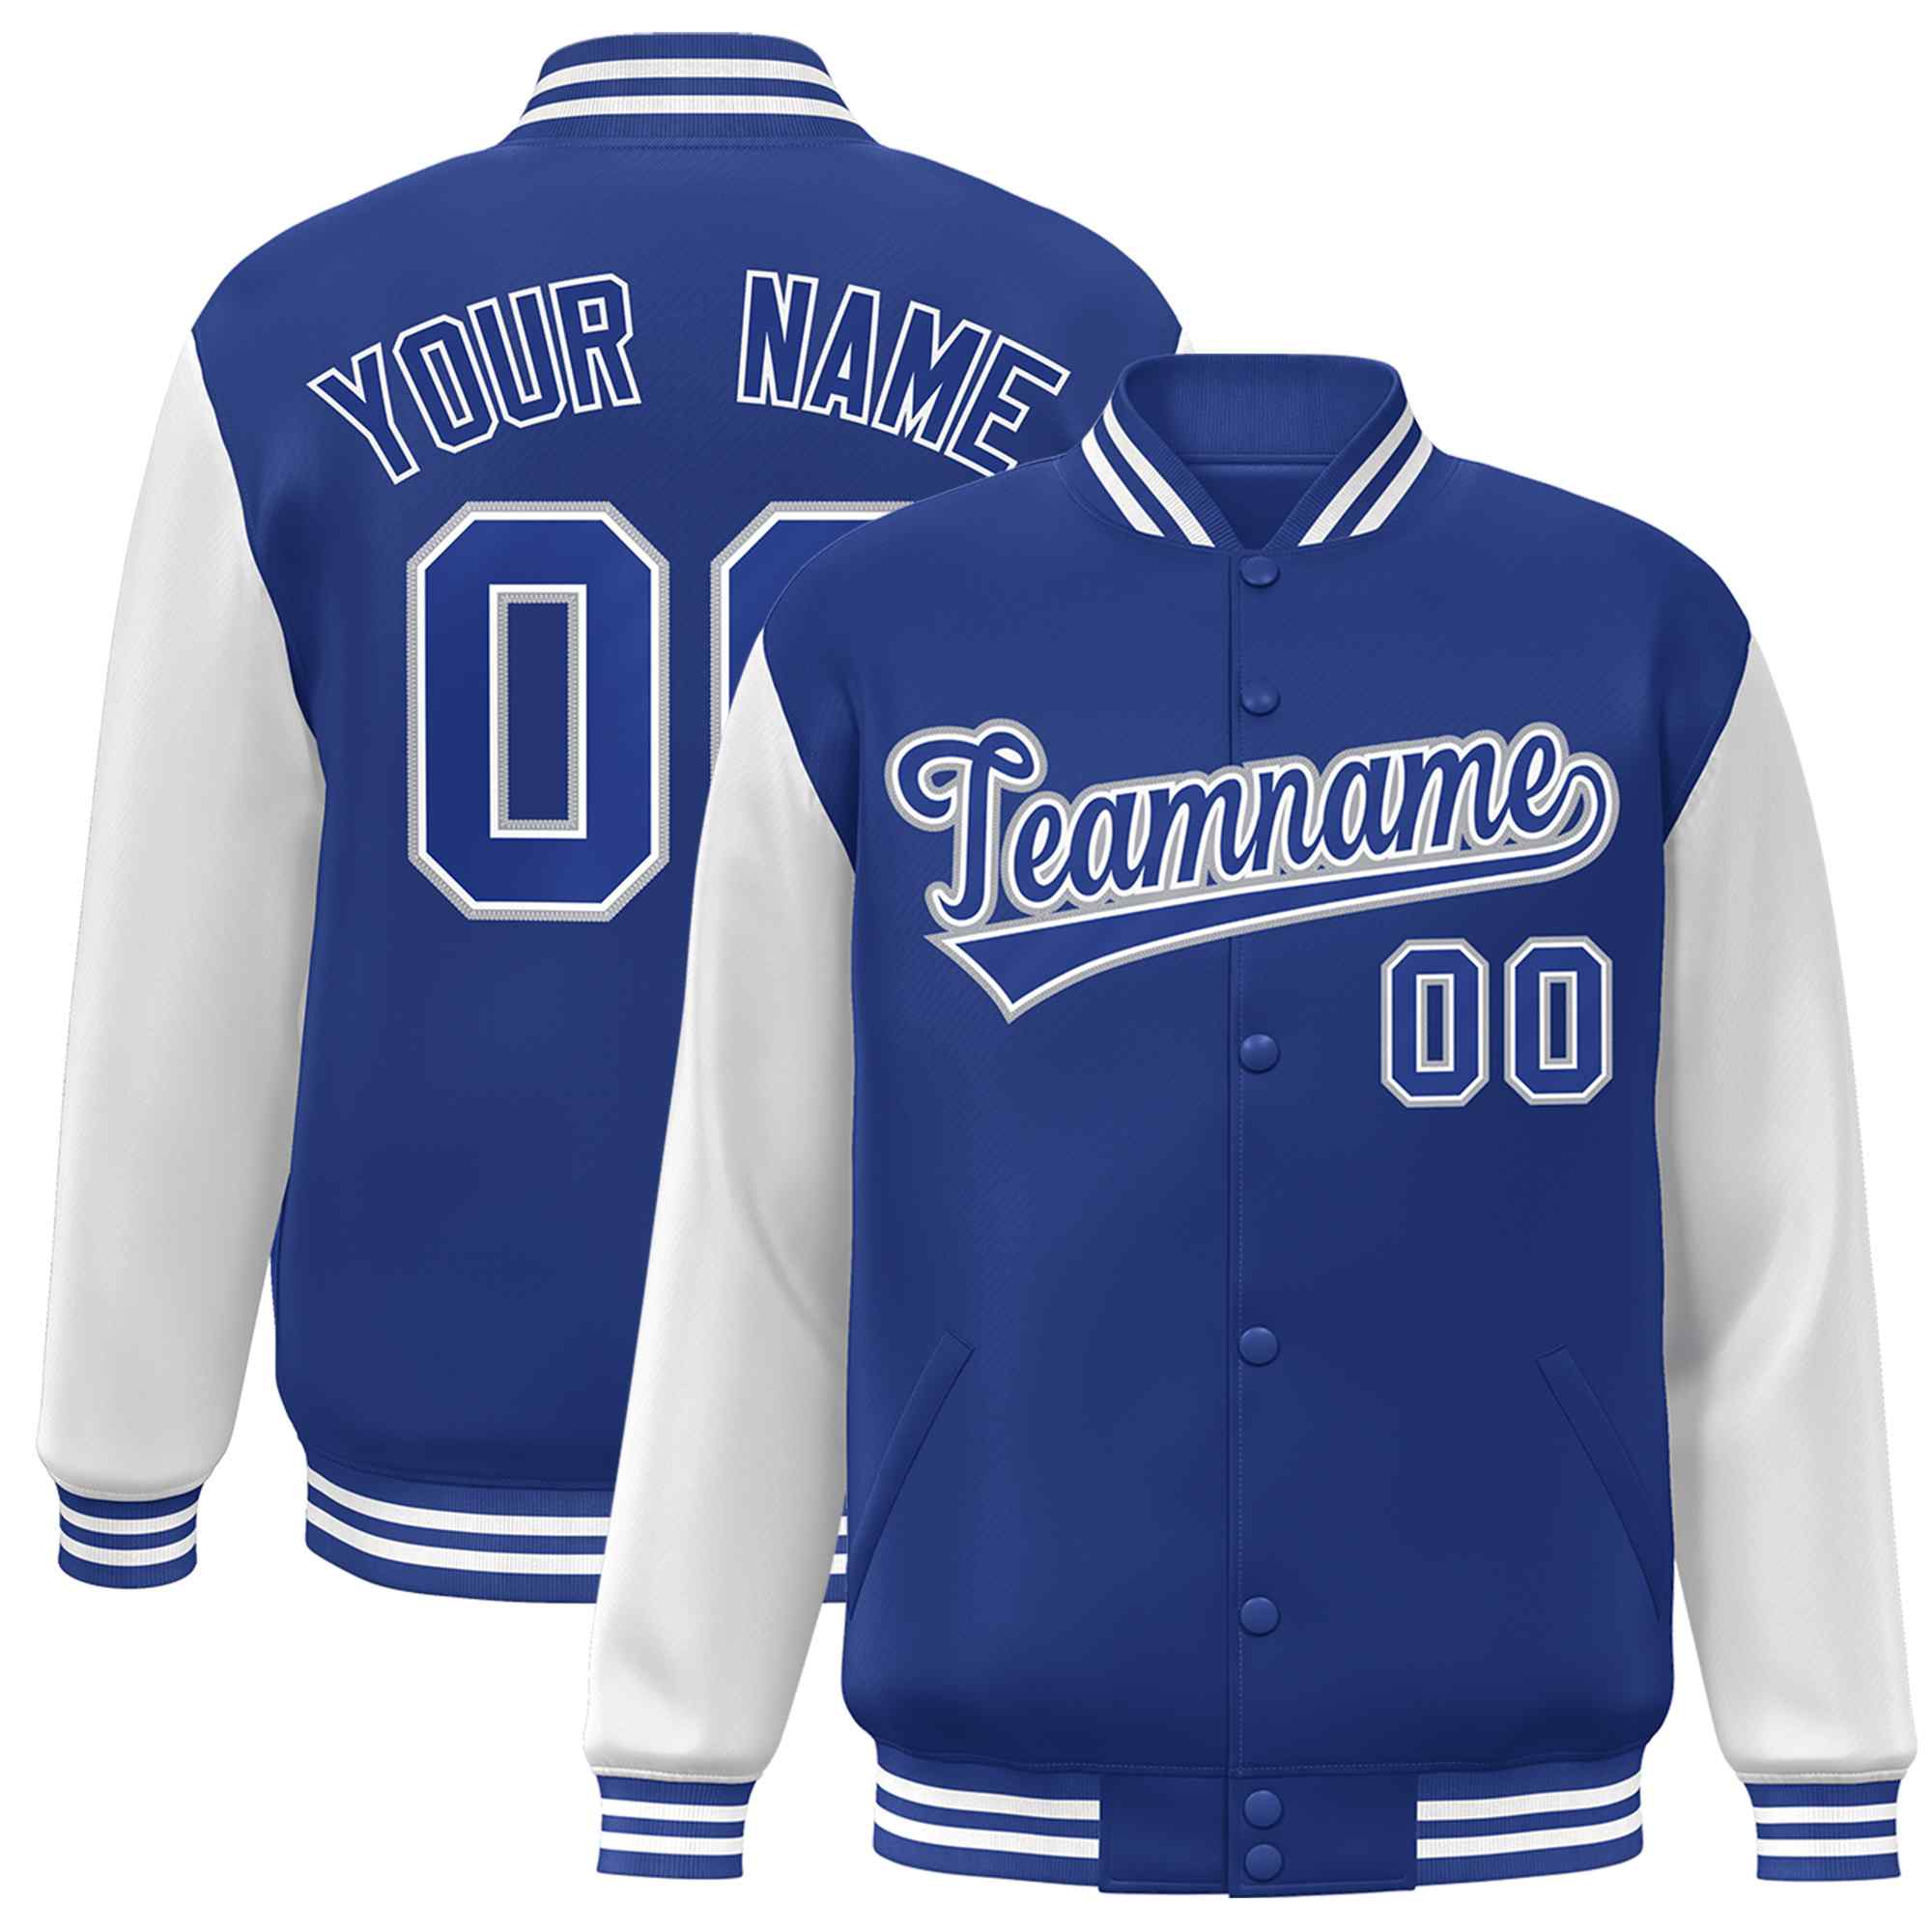 custom made letterman jackets